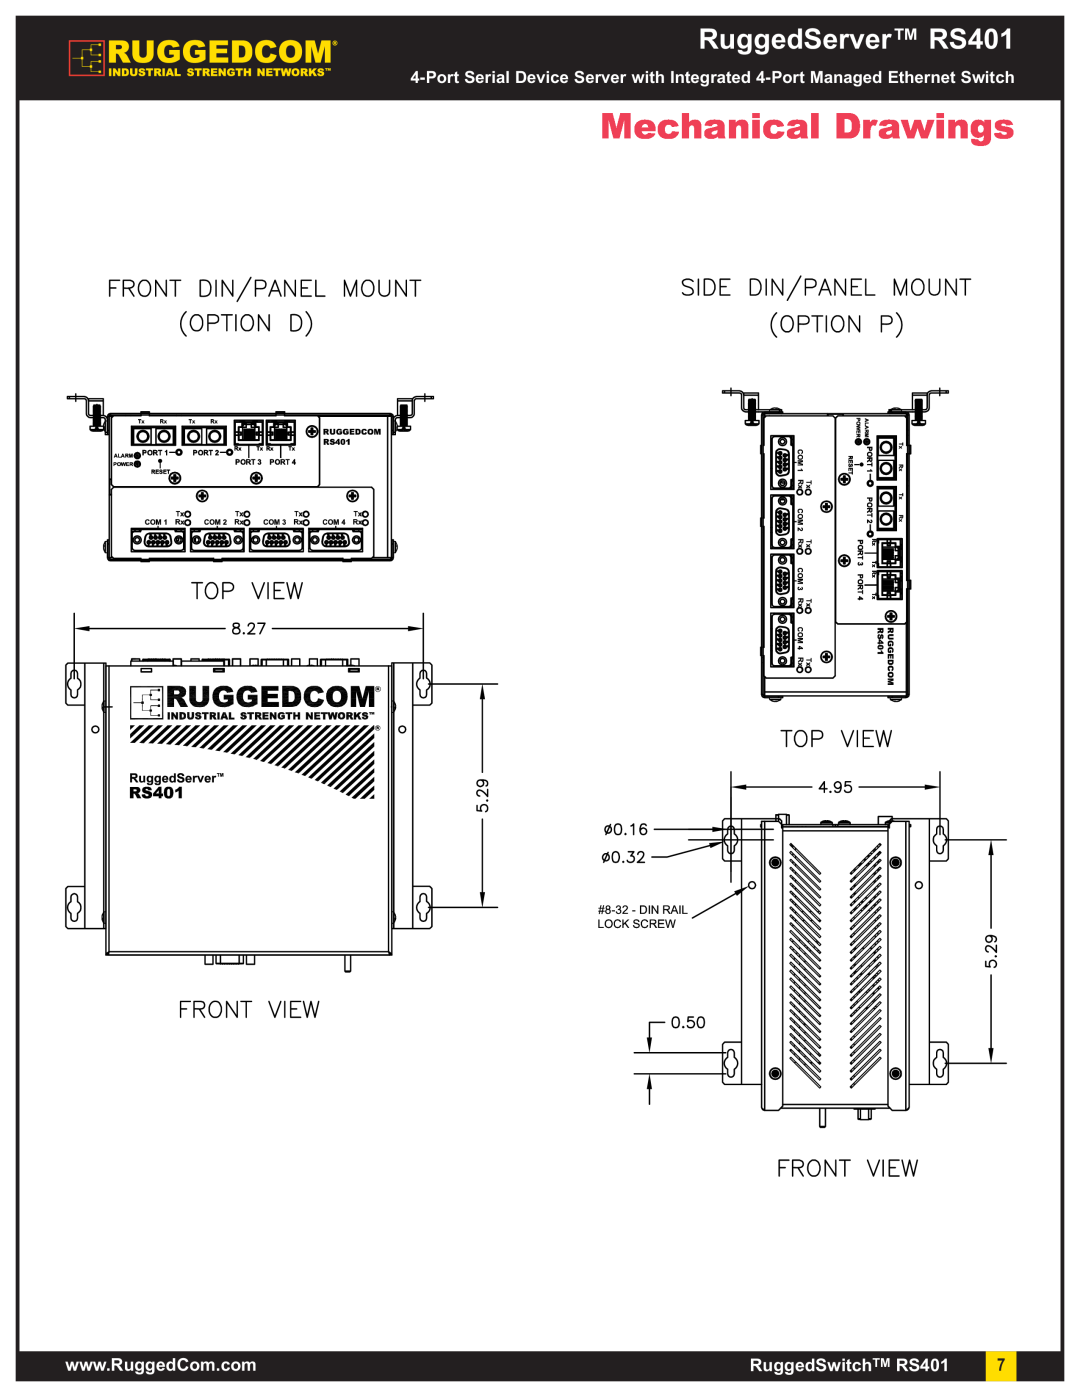 RuggedCom warranty Mechanical Drawings, RuggedServer RS401, RuggedSwitchTM RS401 